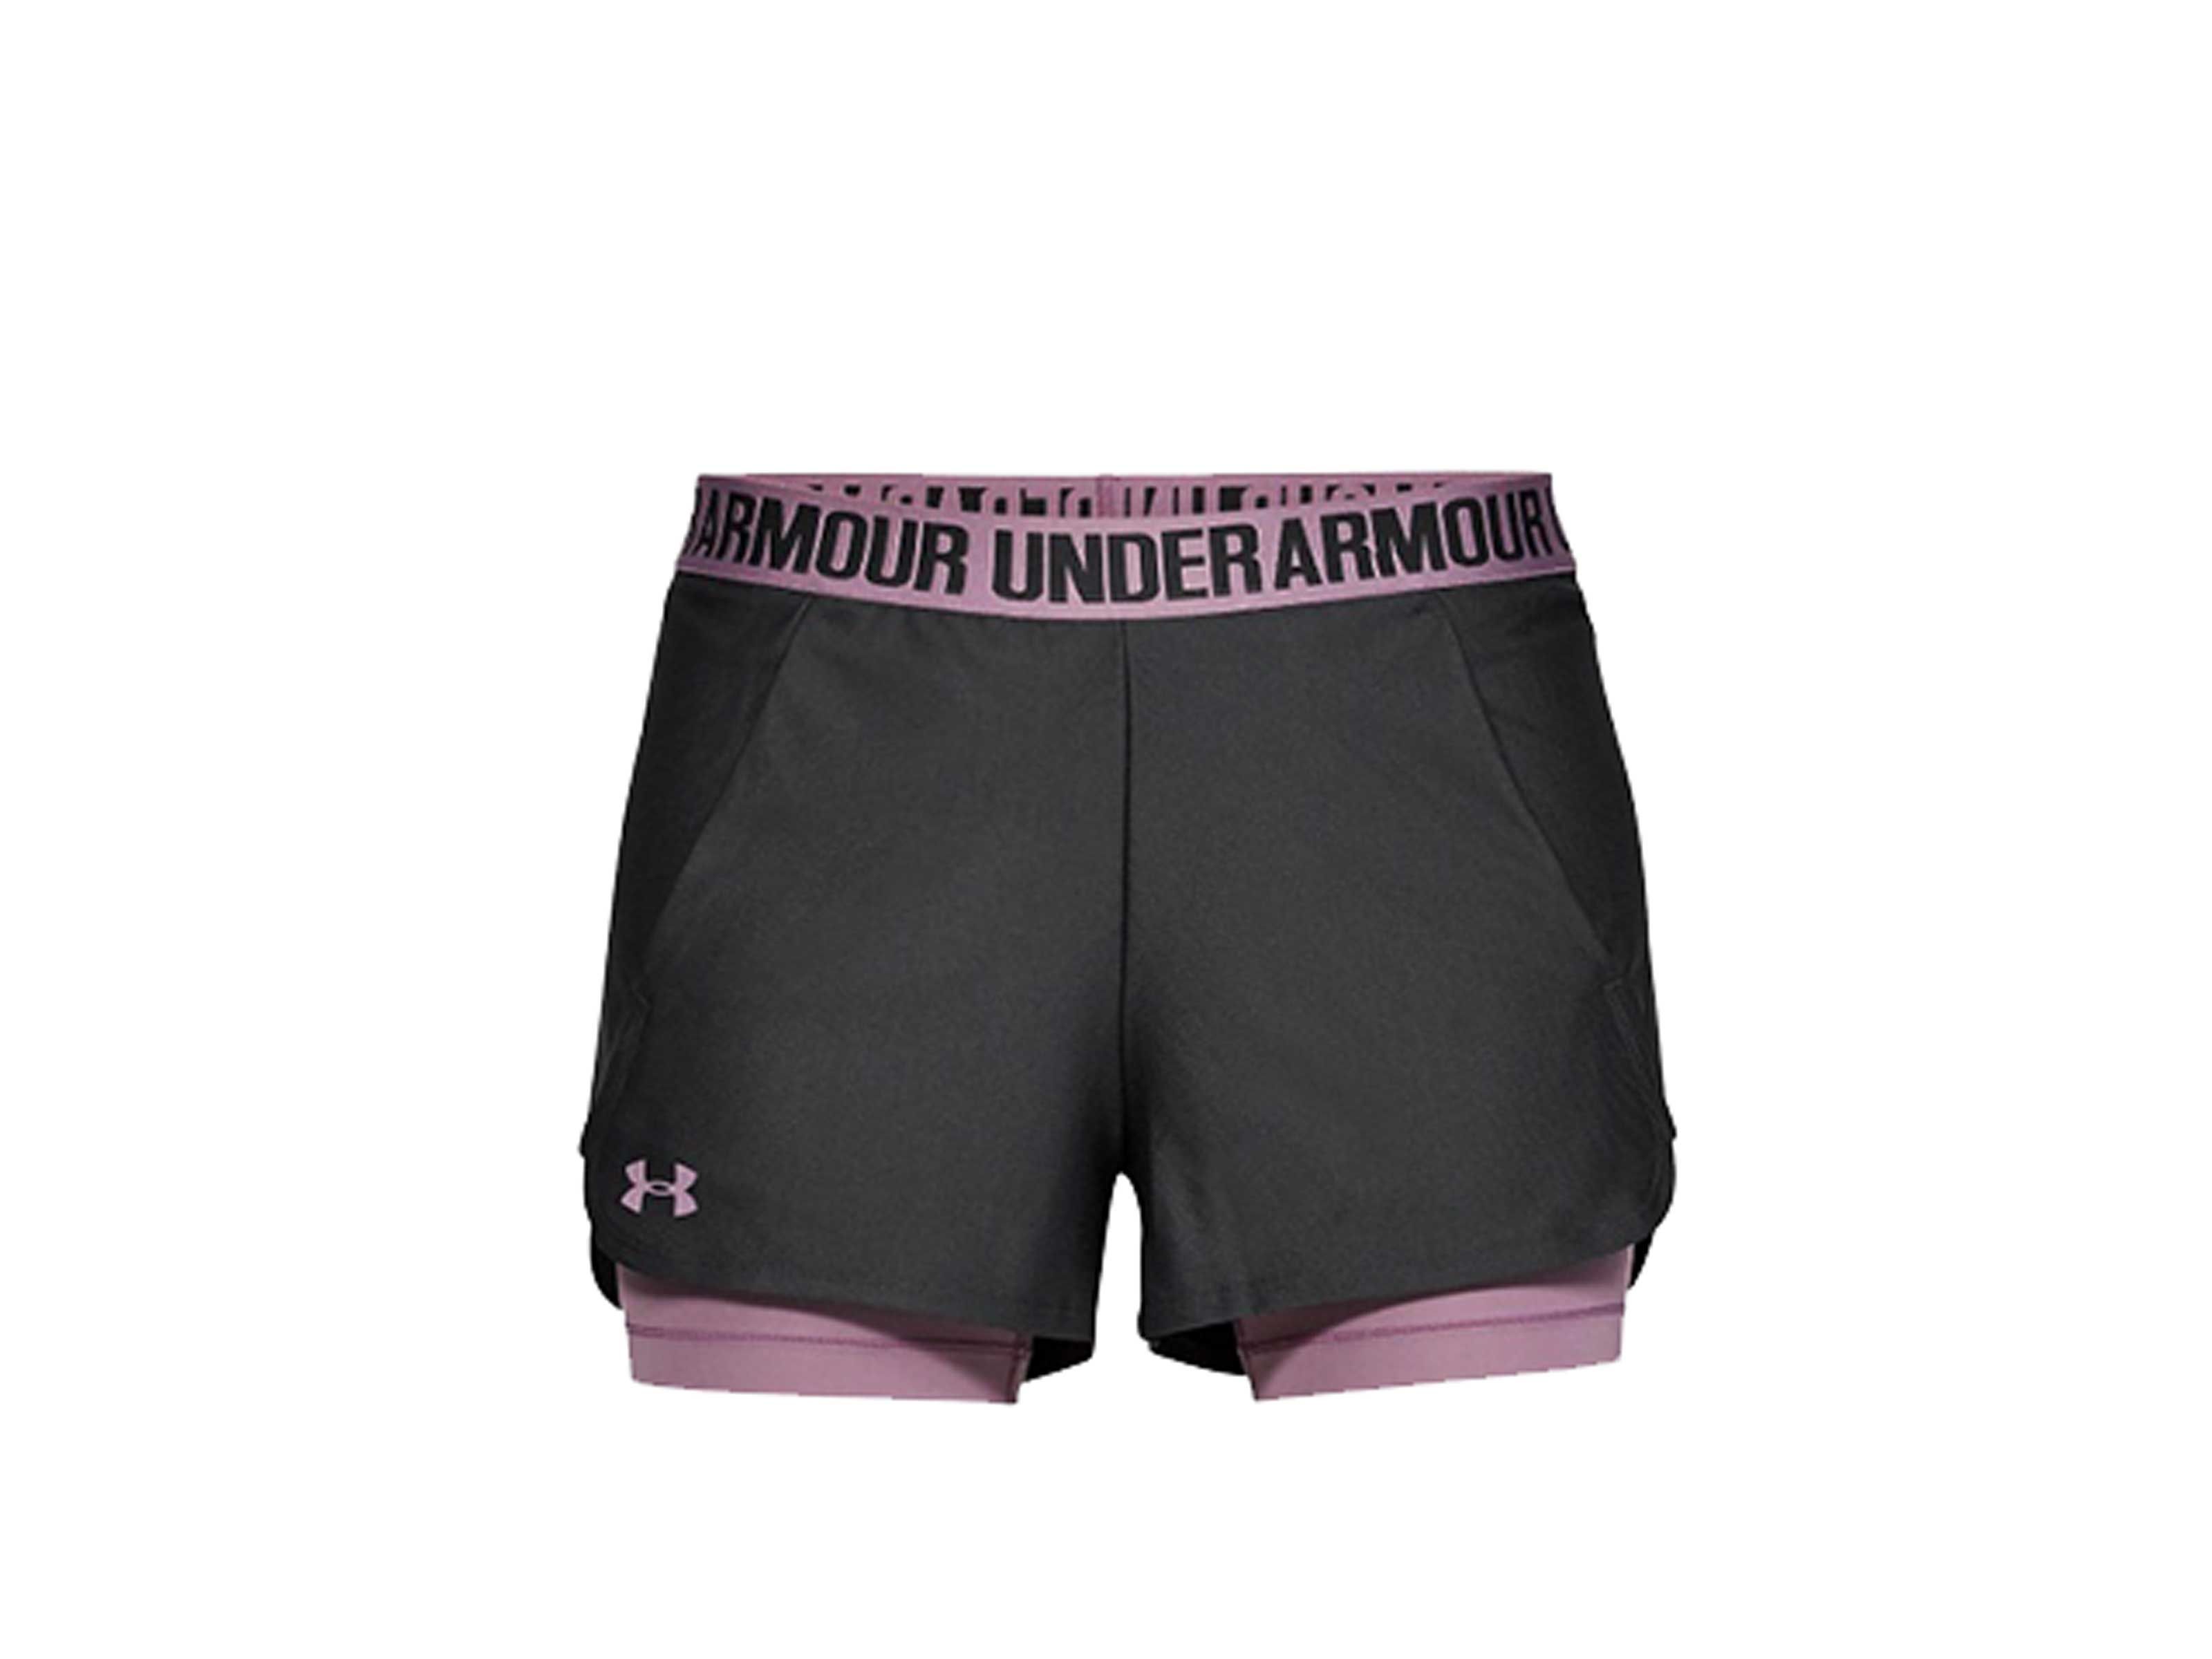 under armour compression shorts ladies